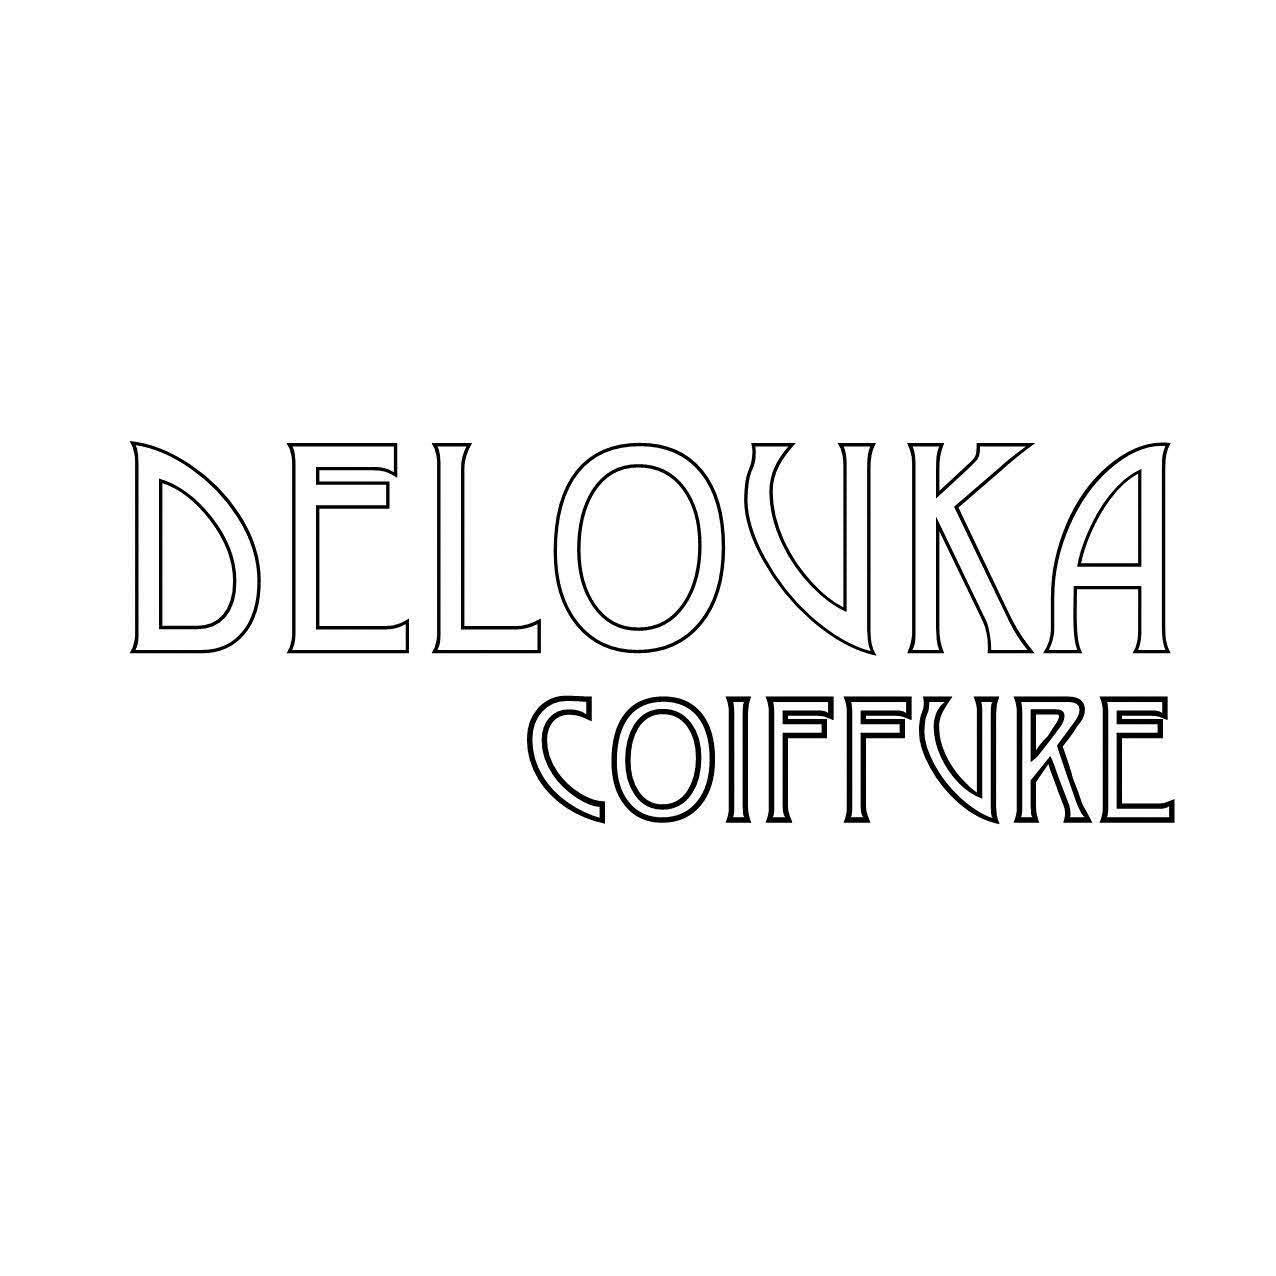 Delouka Coiffure - Coiffeur Doullens Doullens